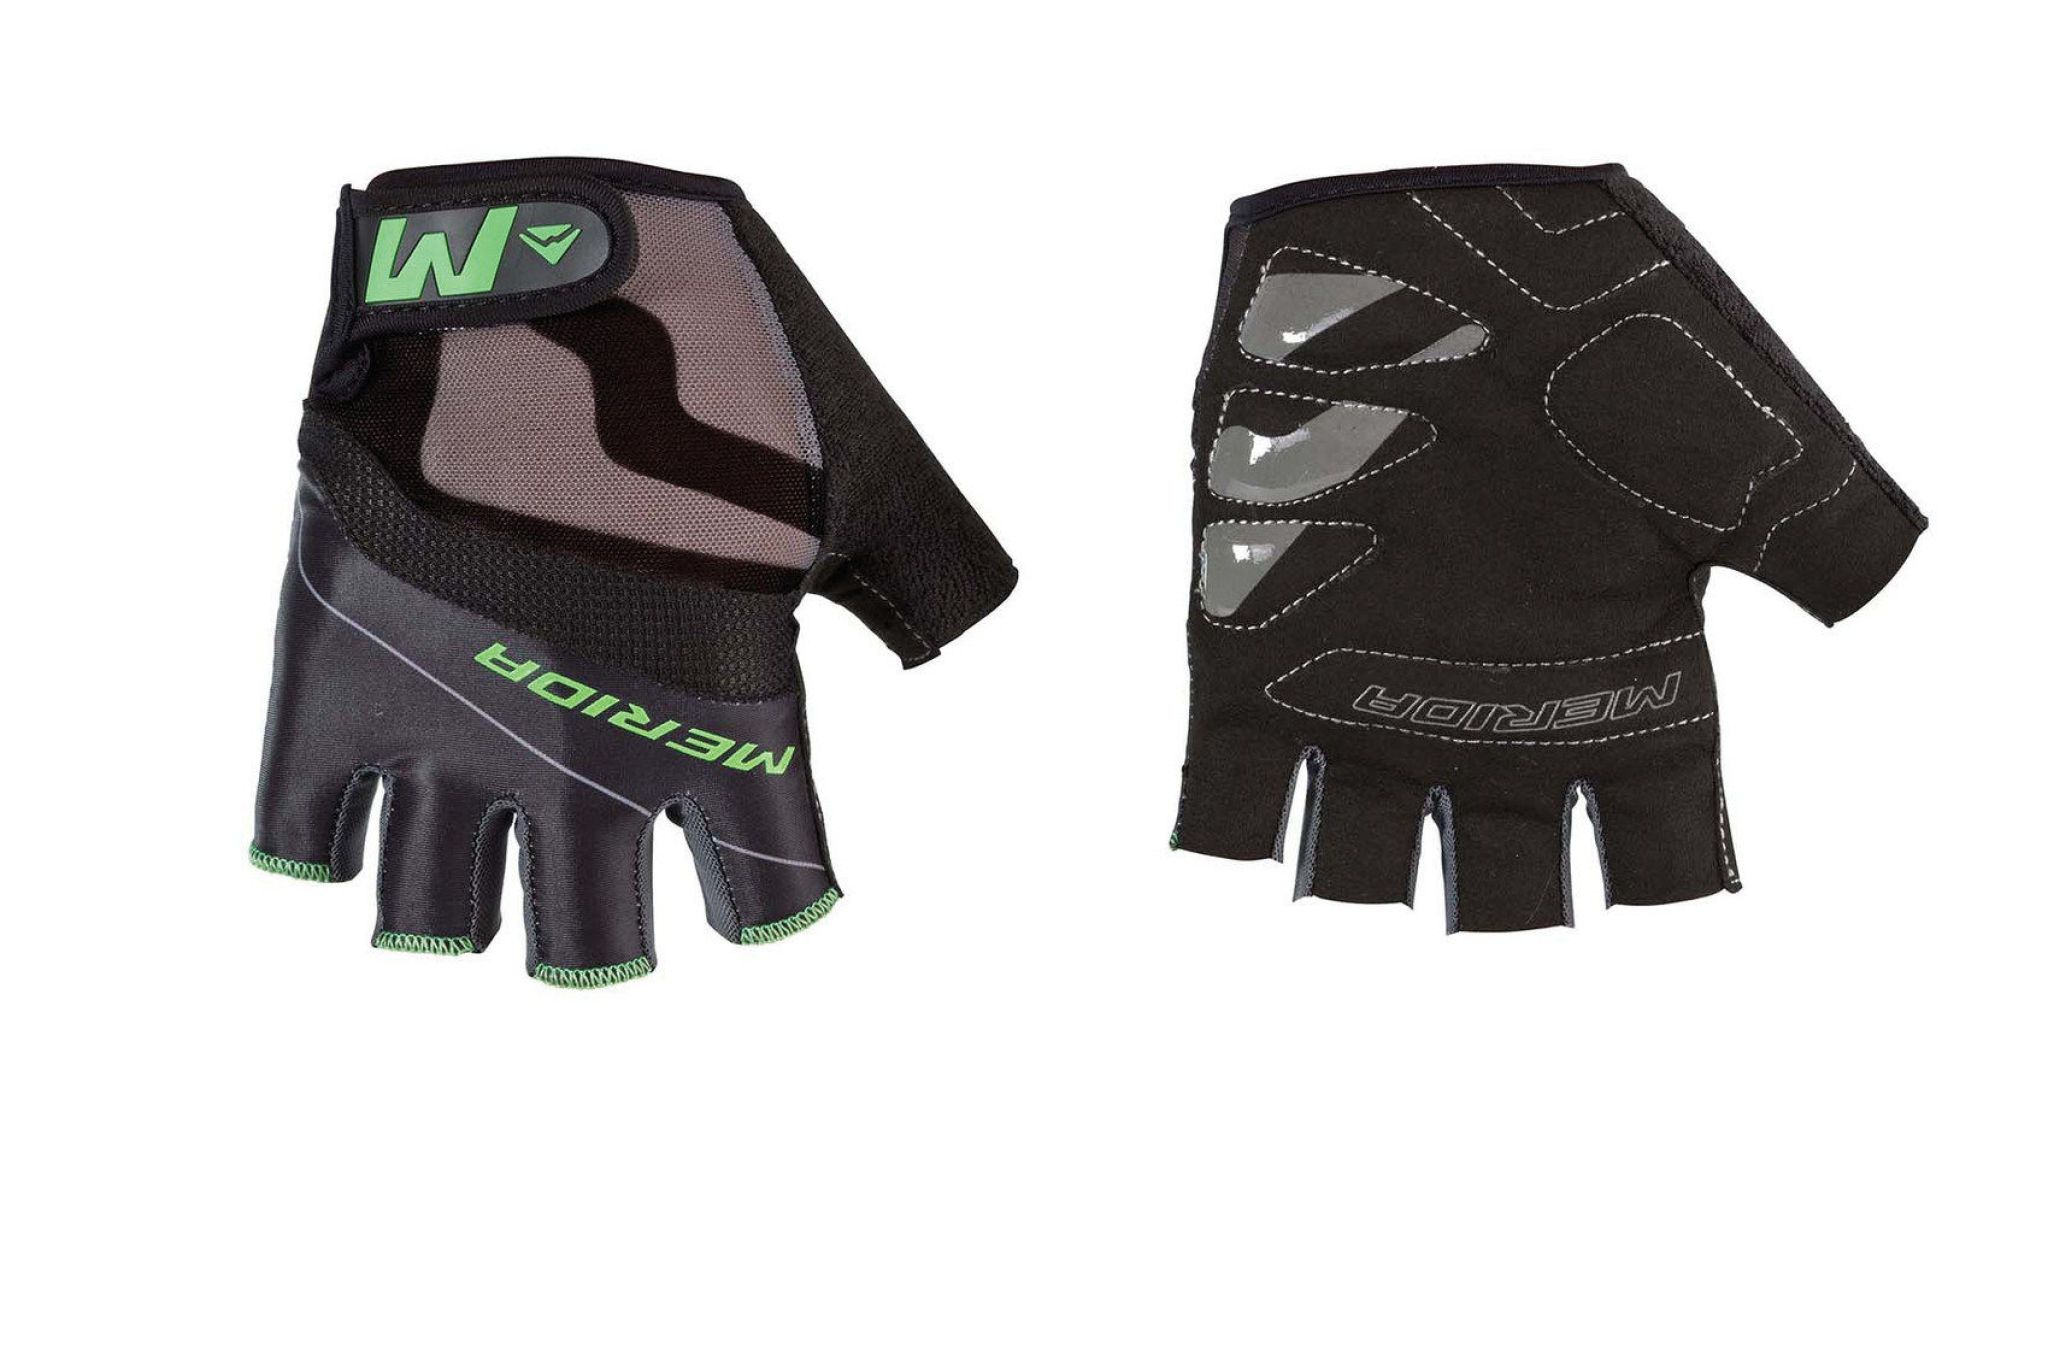 dww-gants velo vatt (vert), gants de cyclisme d't demi doigts